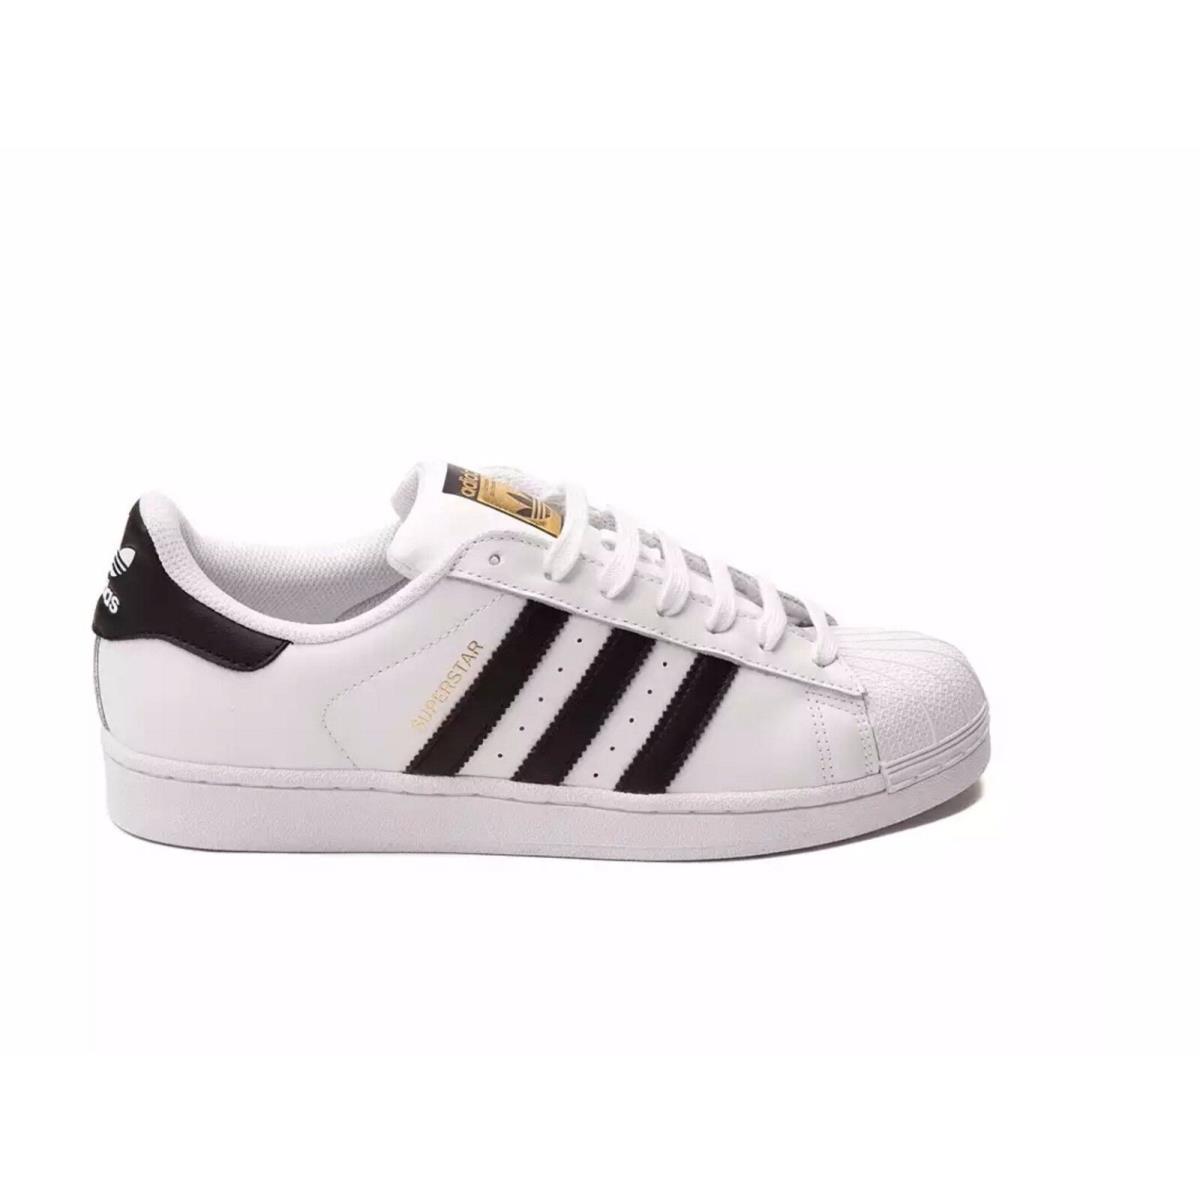 Mens Adidas Originals Superstar II 2 Shelltoe Athleticwhite Black All Sizes